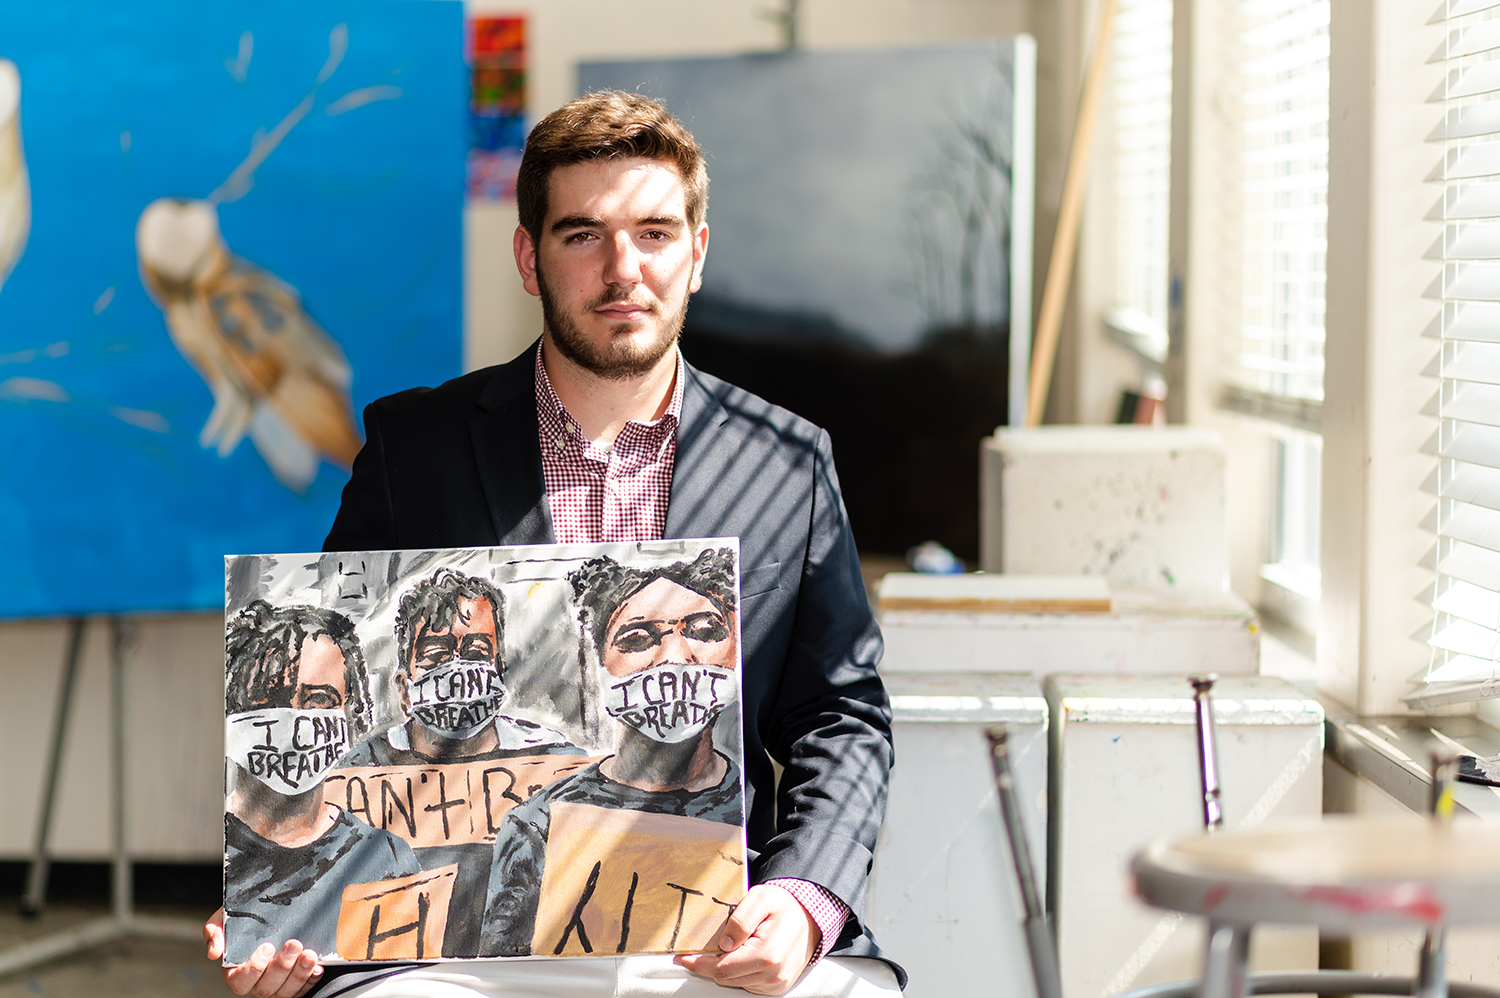 Incoming Transylvania student shares Black Lives Matter message through art